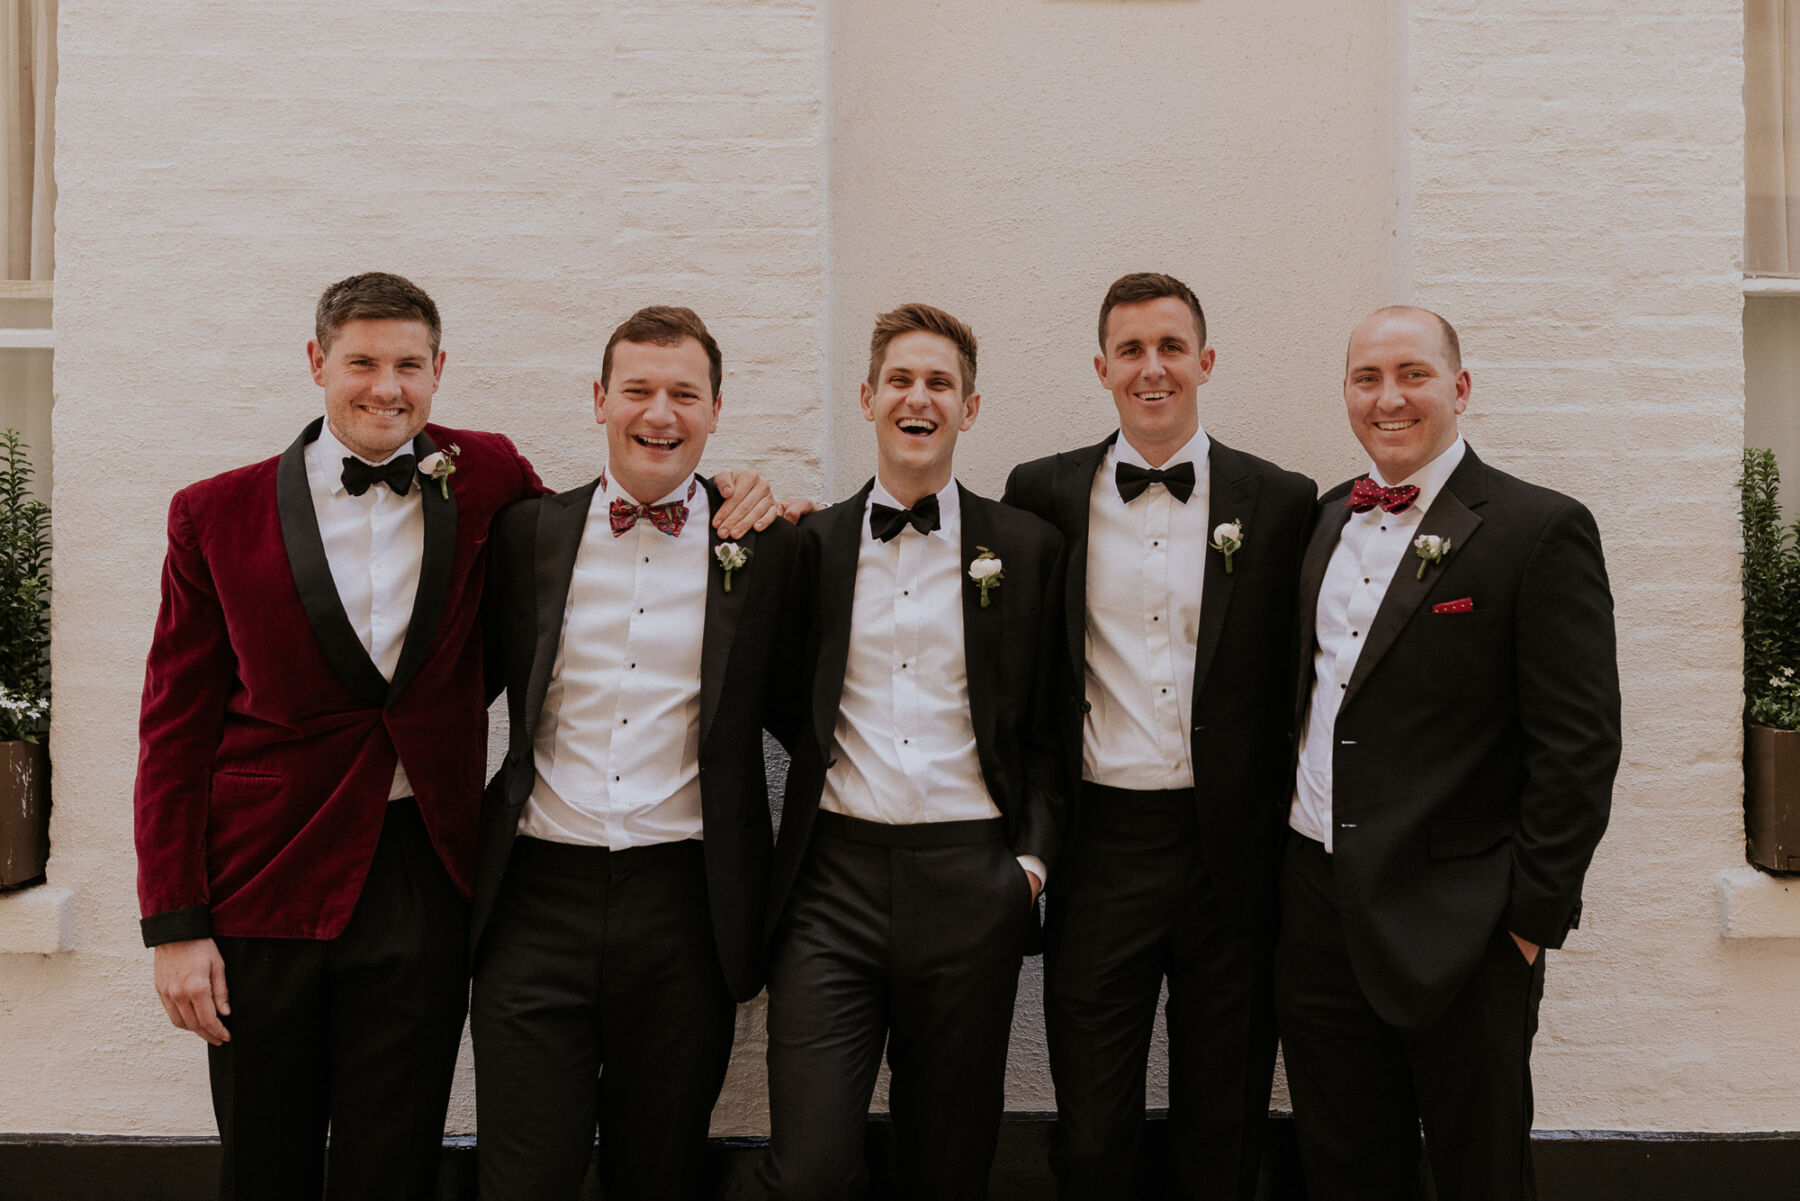 Groom and groomsmen in tuxedo from Moss Bros. Maja Tsolo Photography.